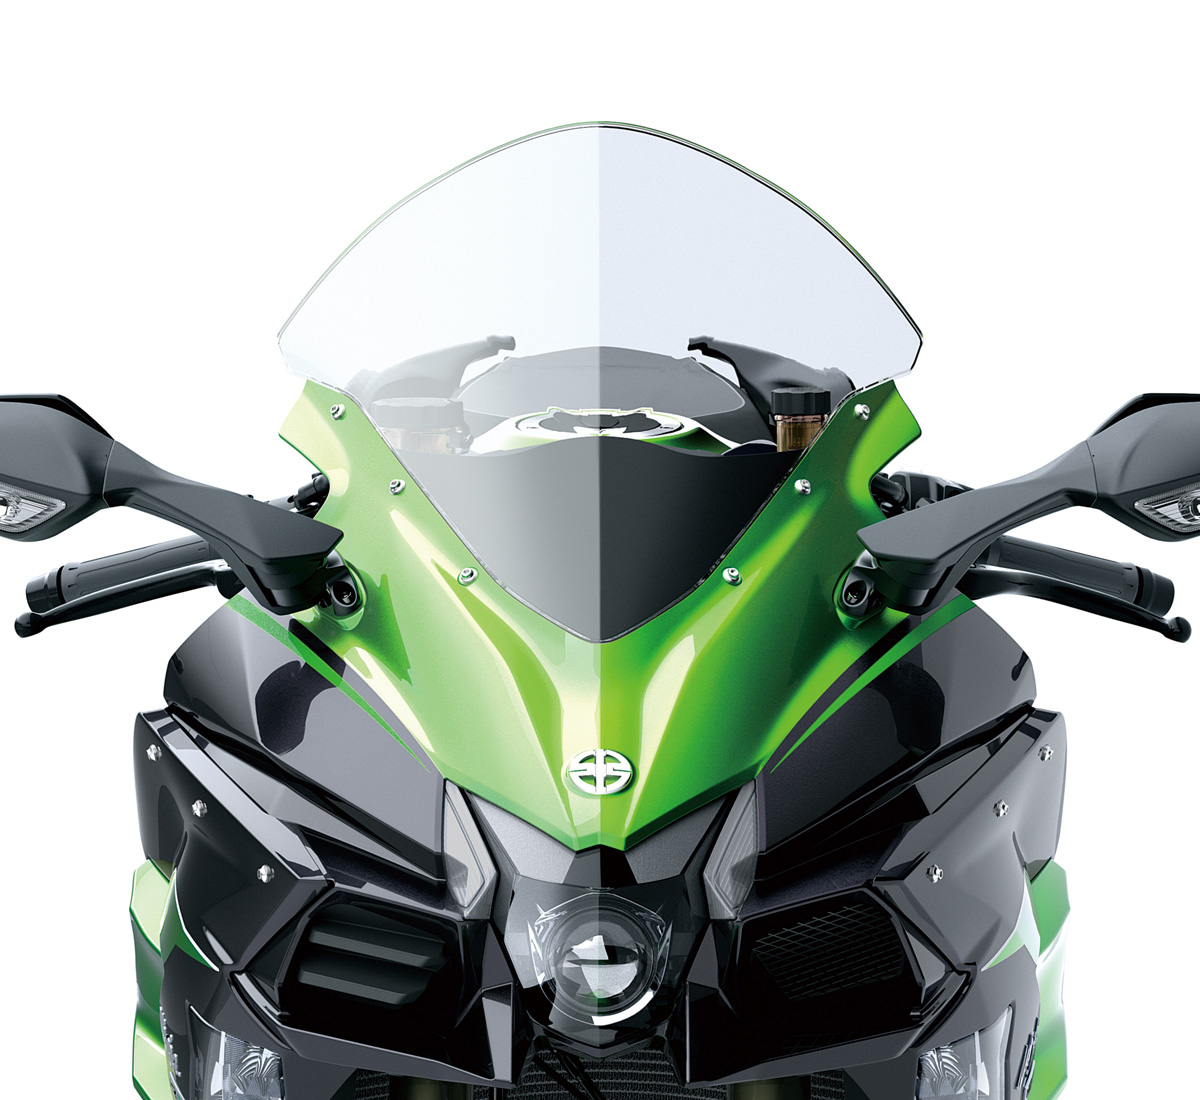 Ninja H2™ SX SE Large Windshield | Kawasaki Motors Corp., U.S.A.